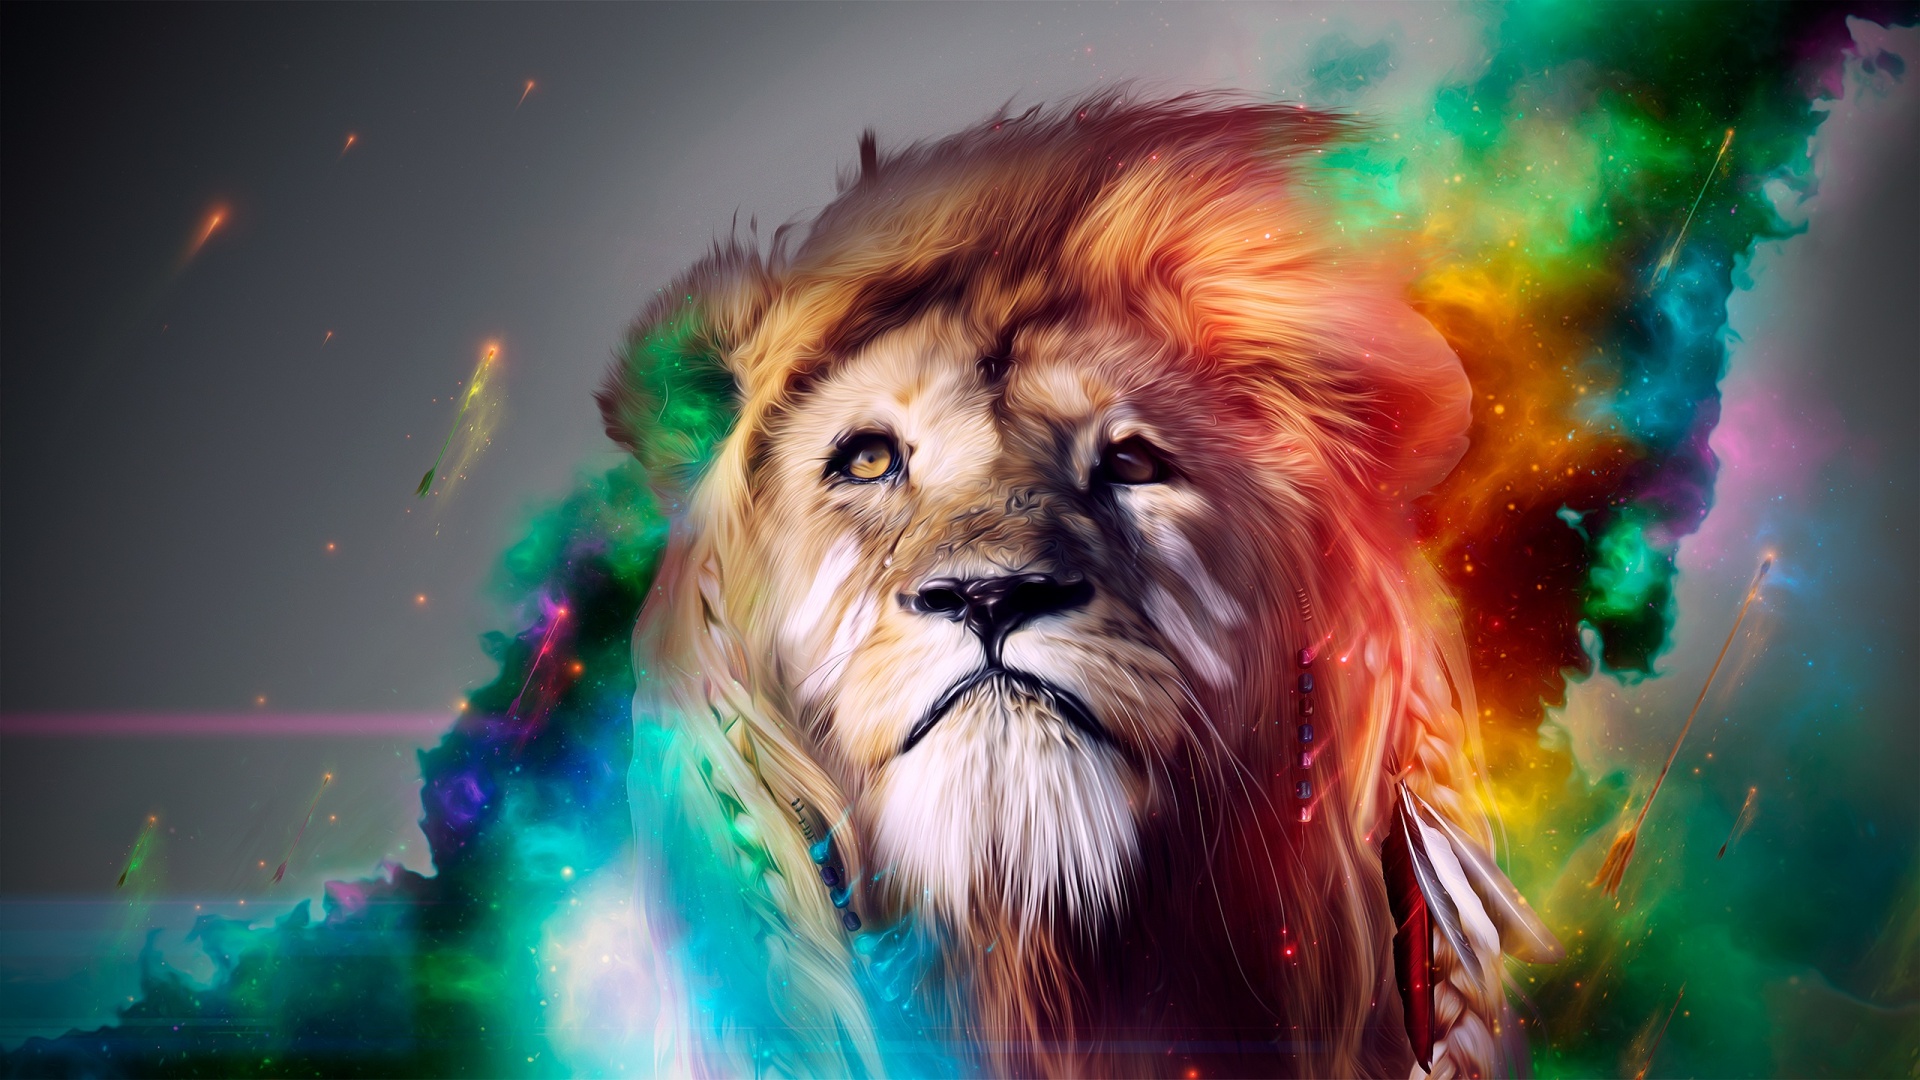 41+] Cool Lion Wallpapers - WallpaperSafari